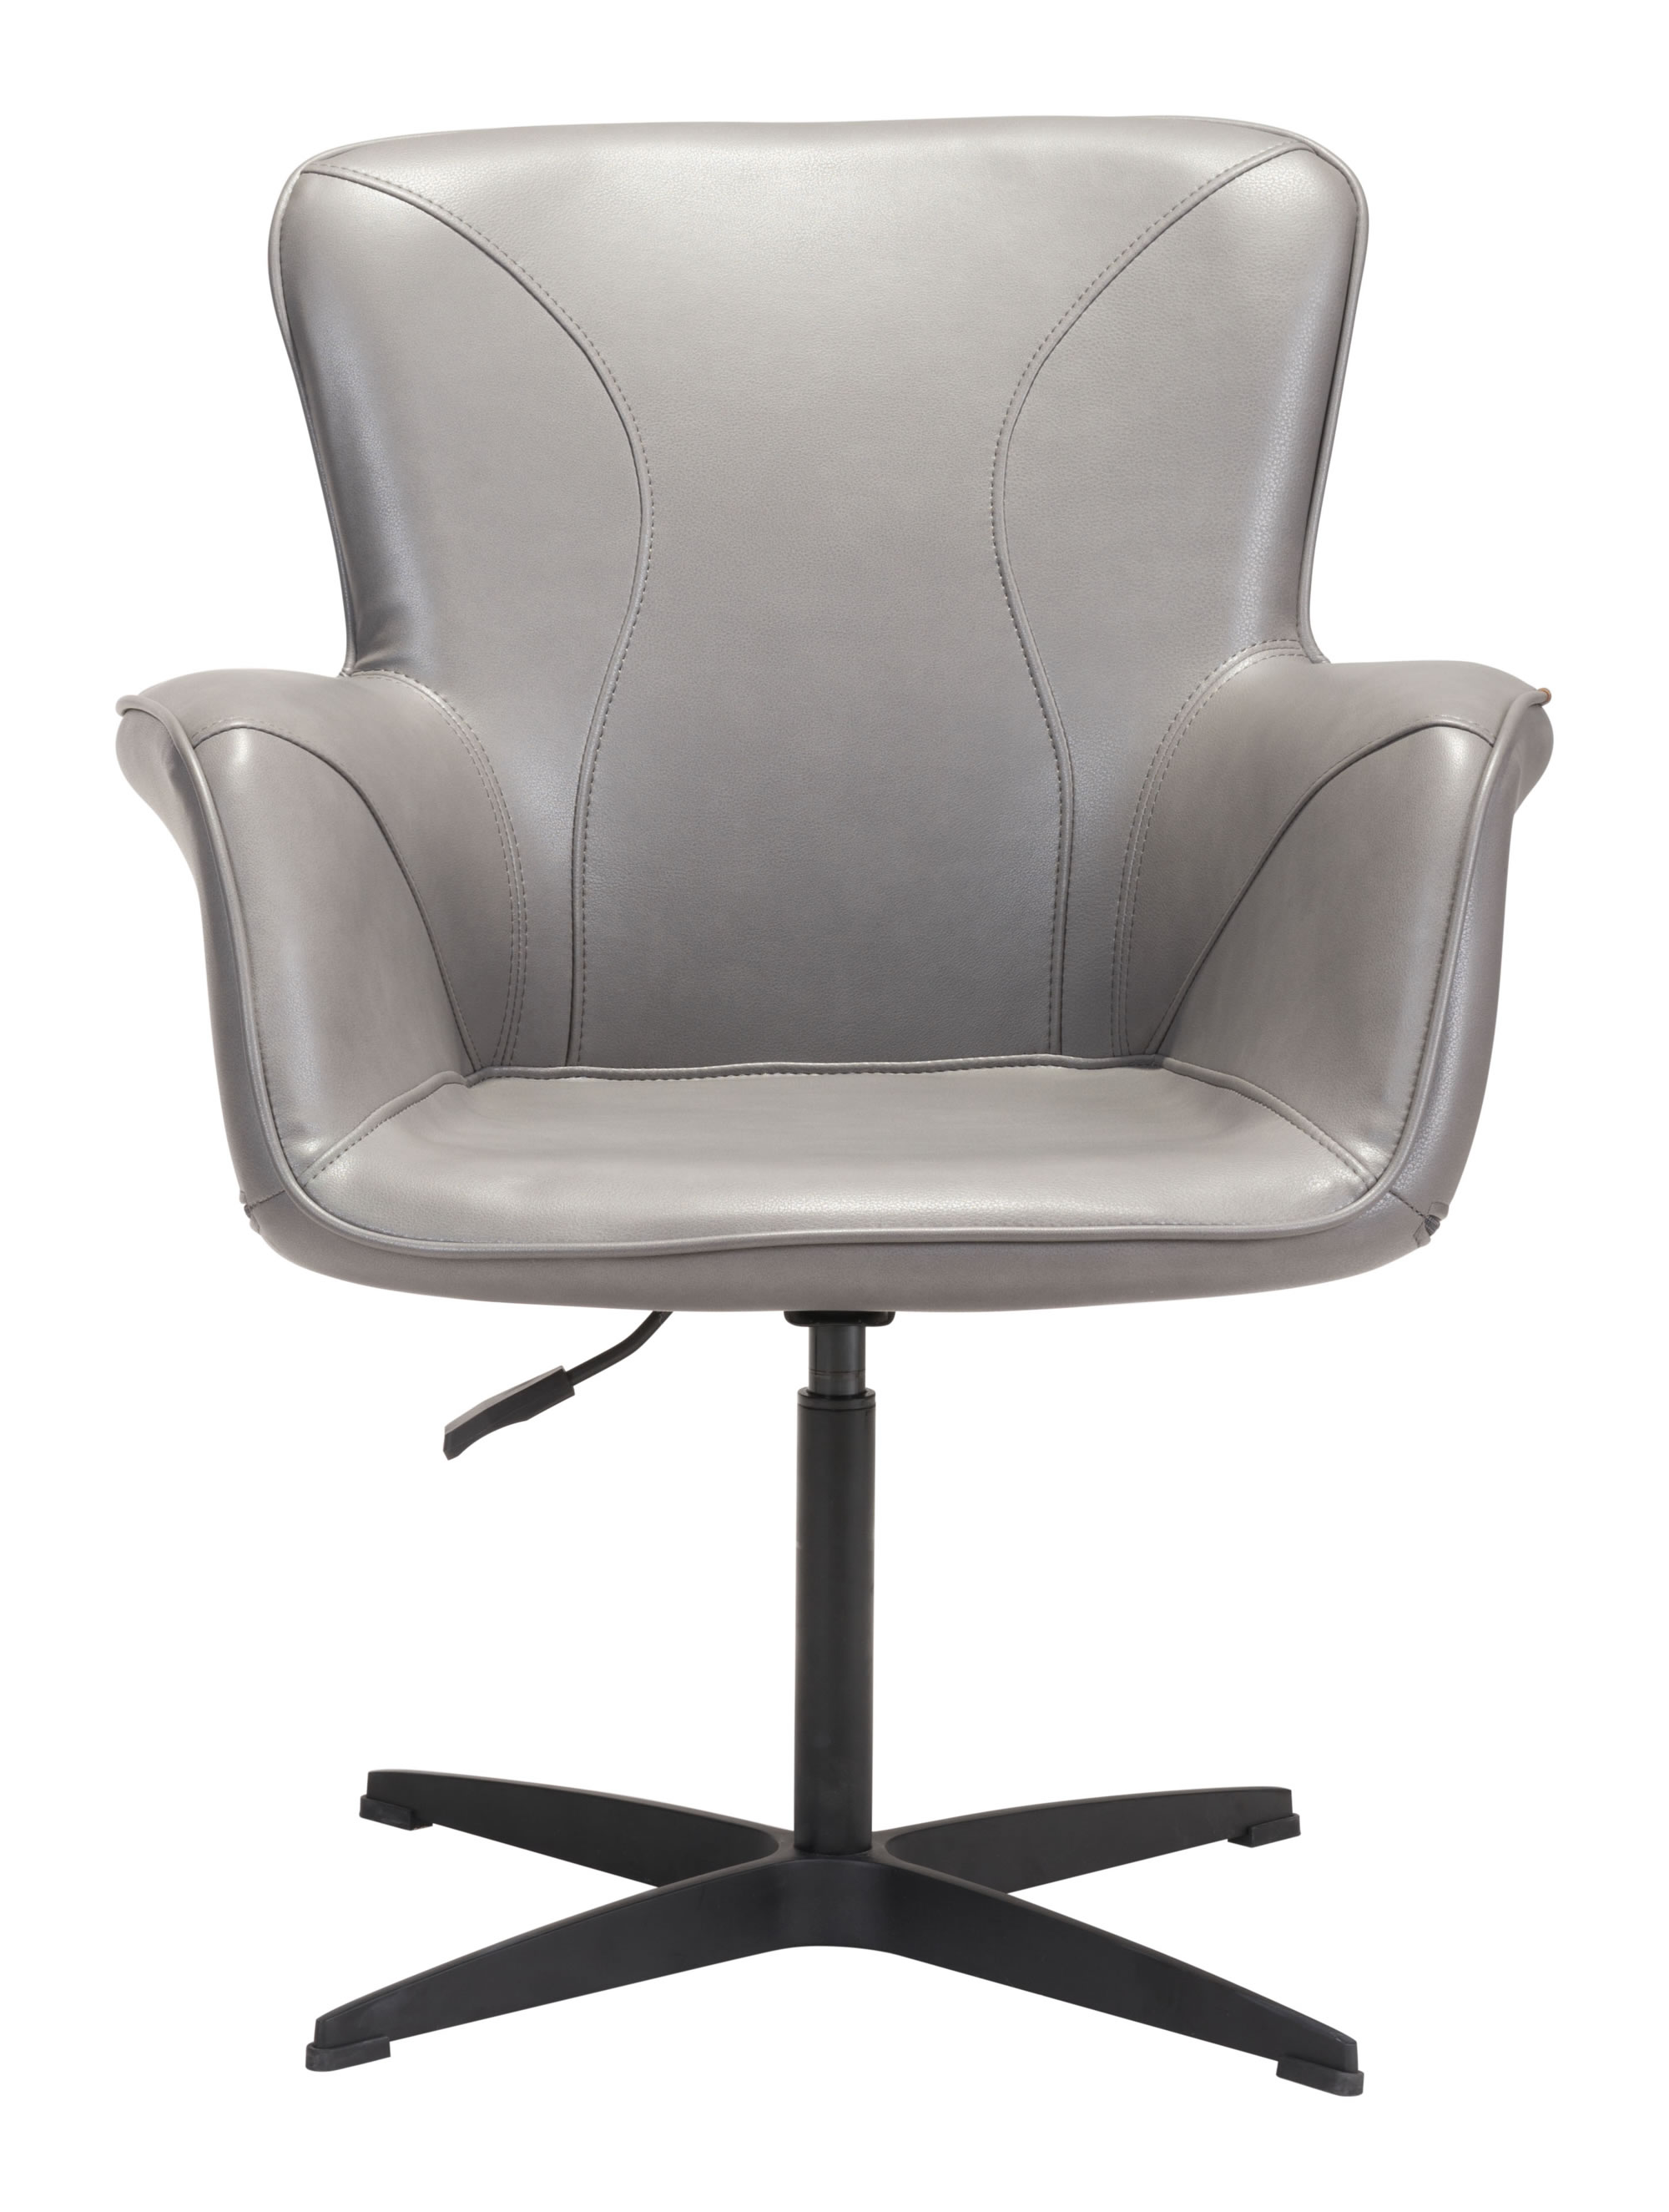 27.6" x 26.4" x 34.1" Gray, Leatherette, Aluminum, Arm Chair